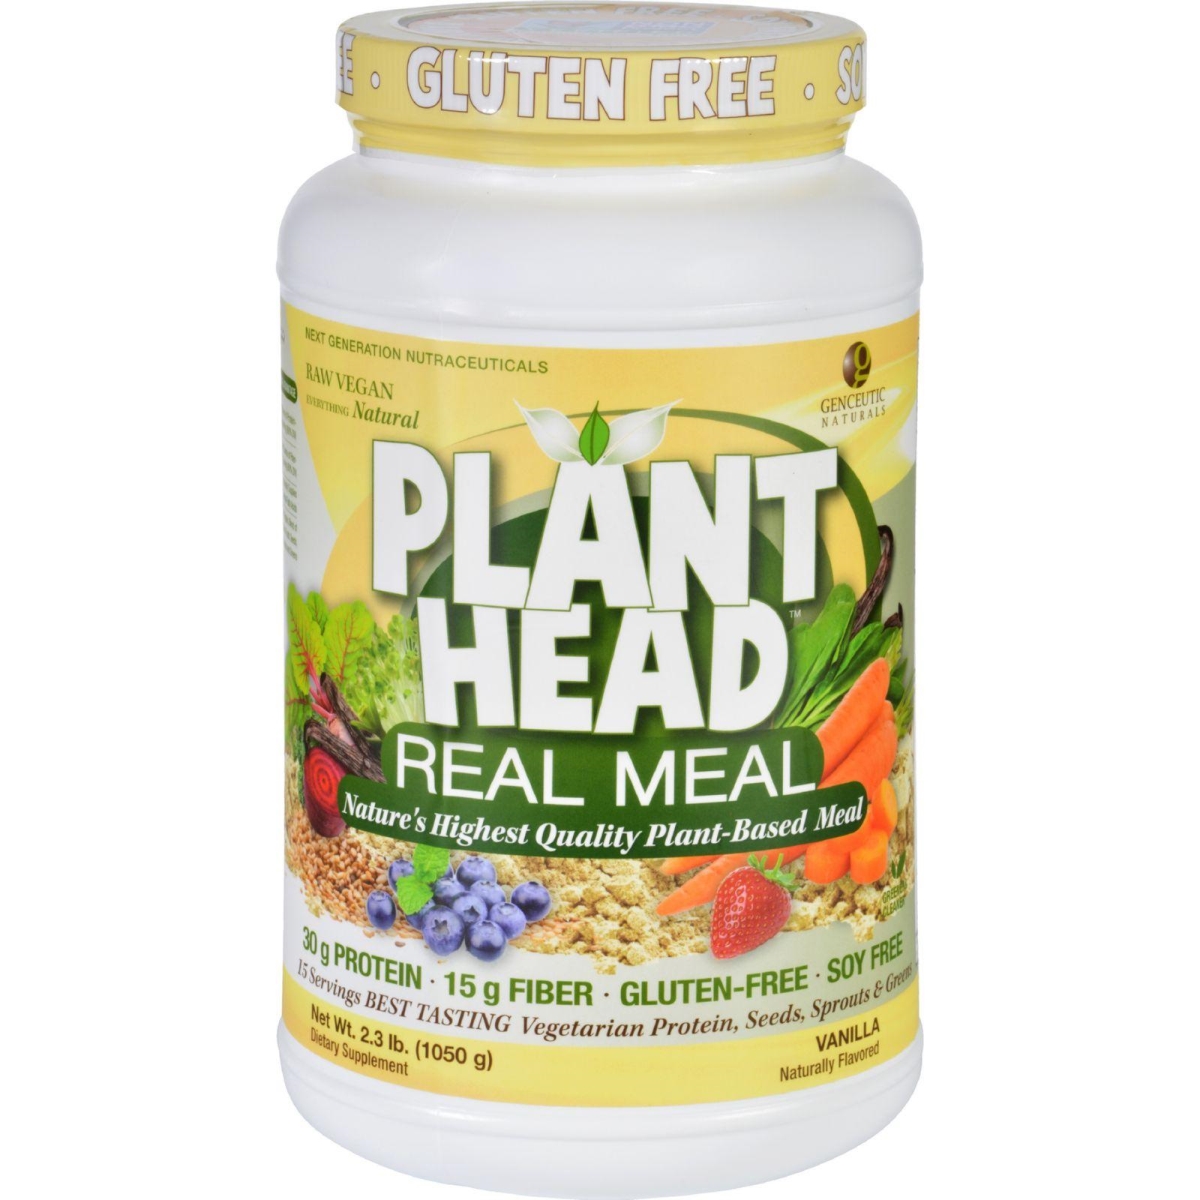 Hg1620301 2.3 Lbs Plant Head Real Meal, Vanilla